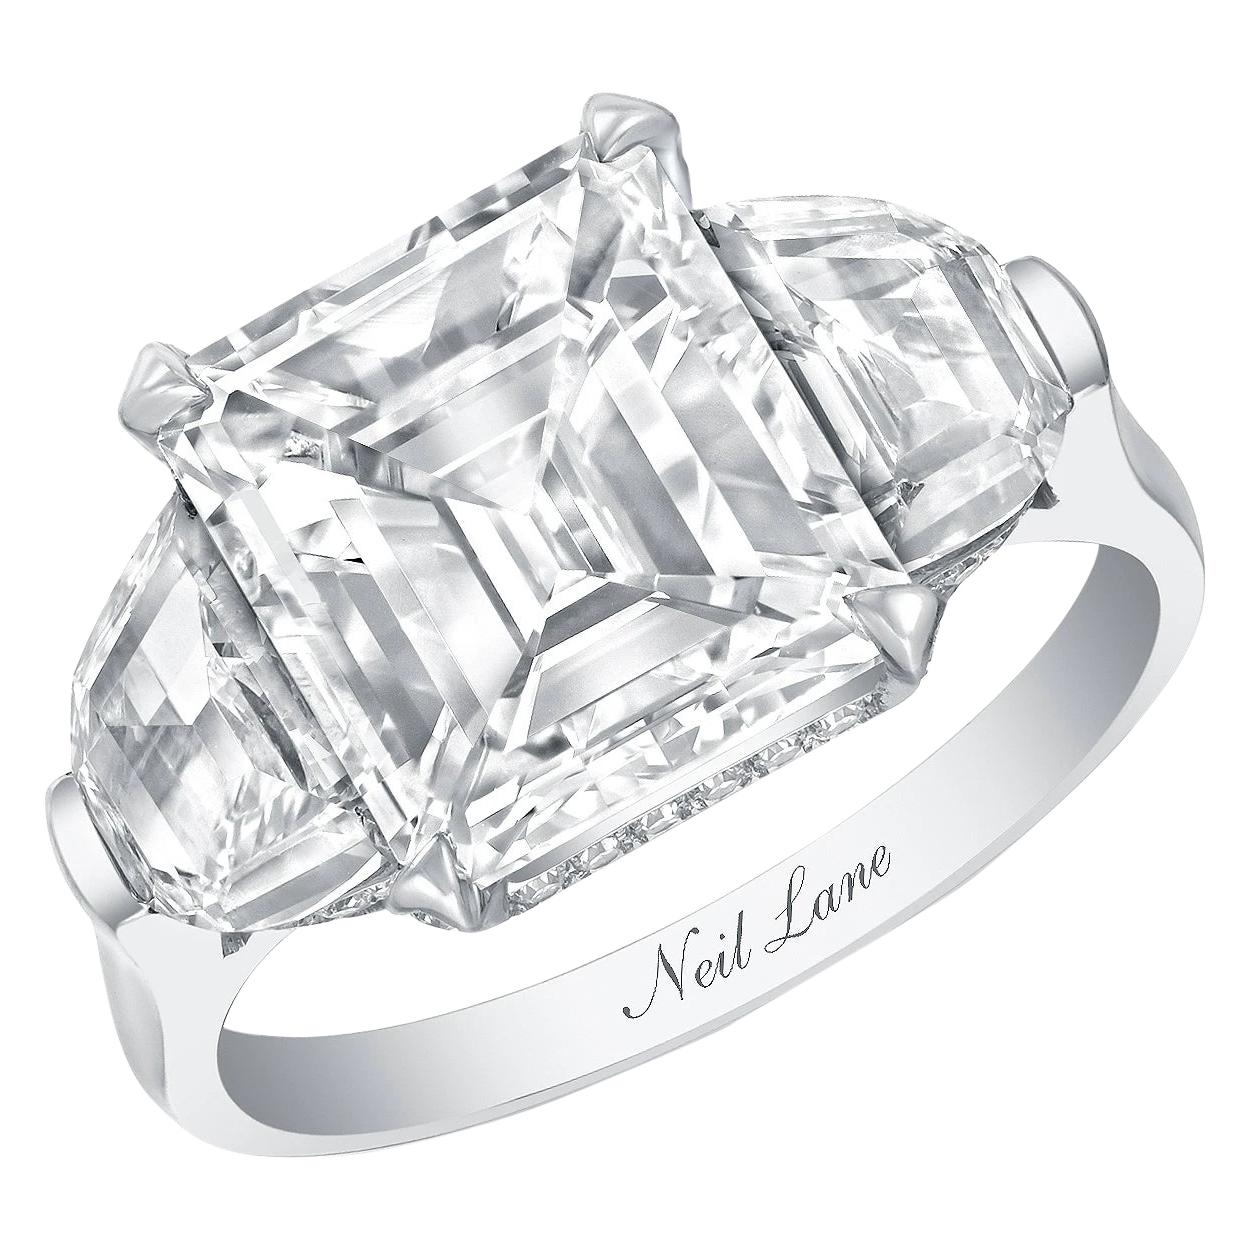 Neil Lane Couture Design Emerald-Cut Diamond, Platinum Ring For Sale